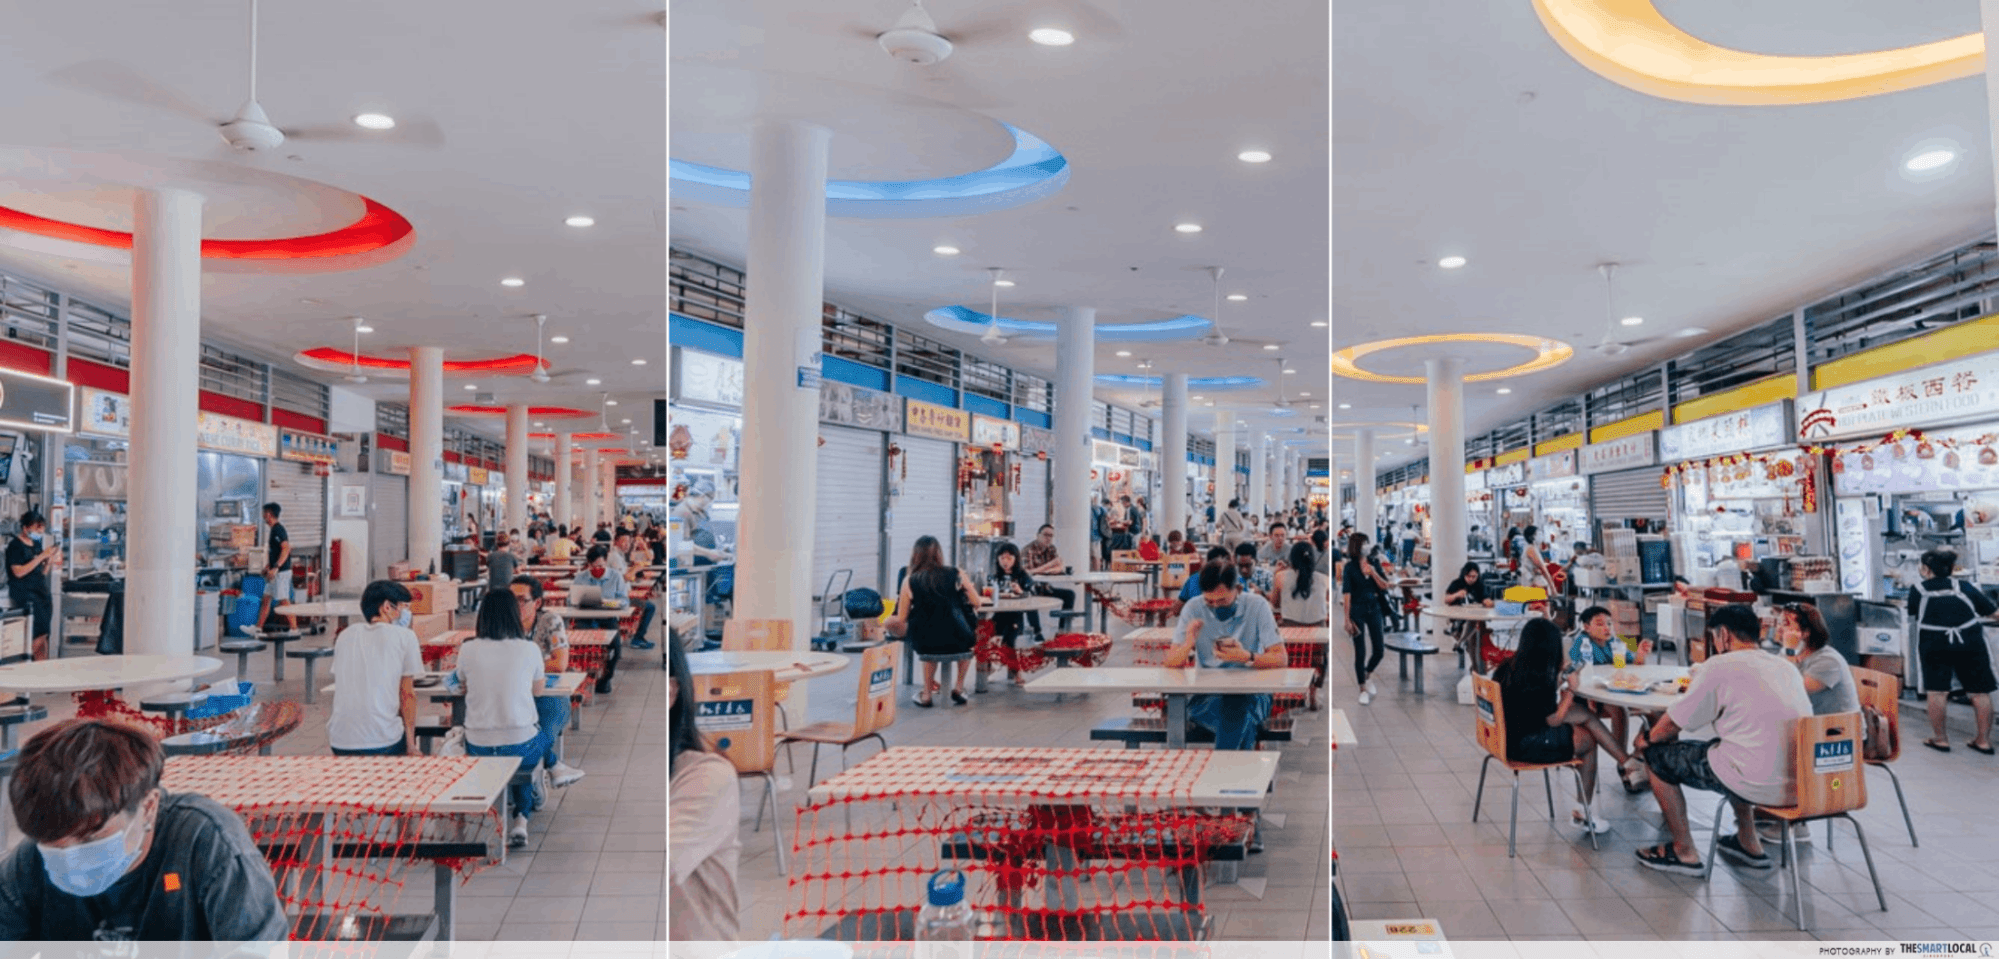 unique food courts in sg tiong bahru market